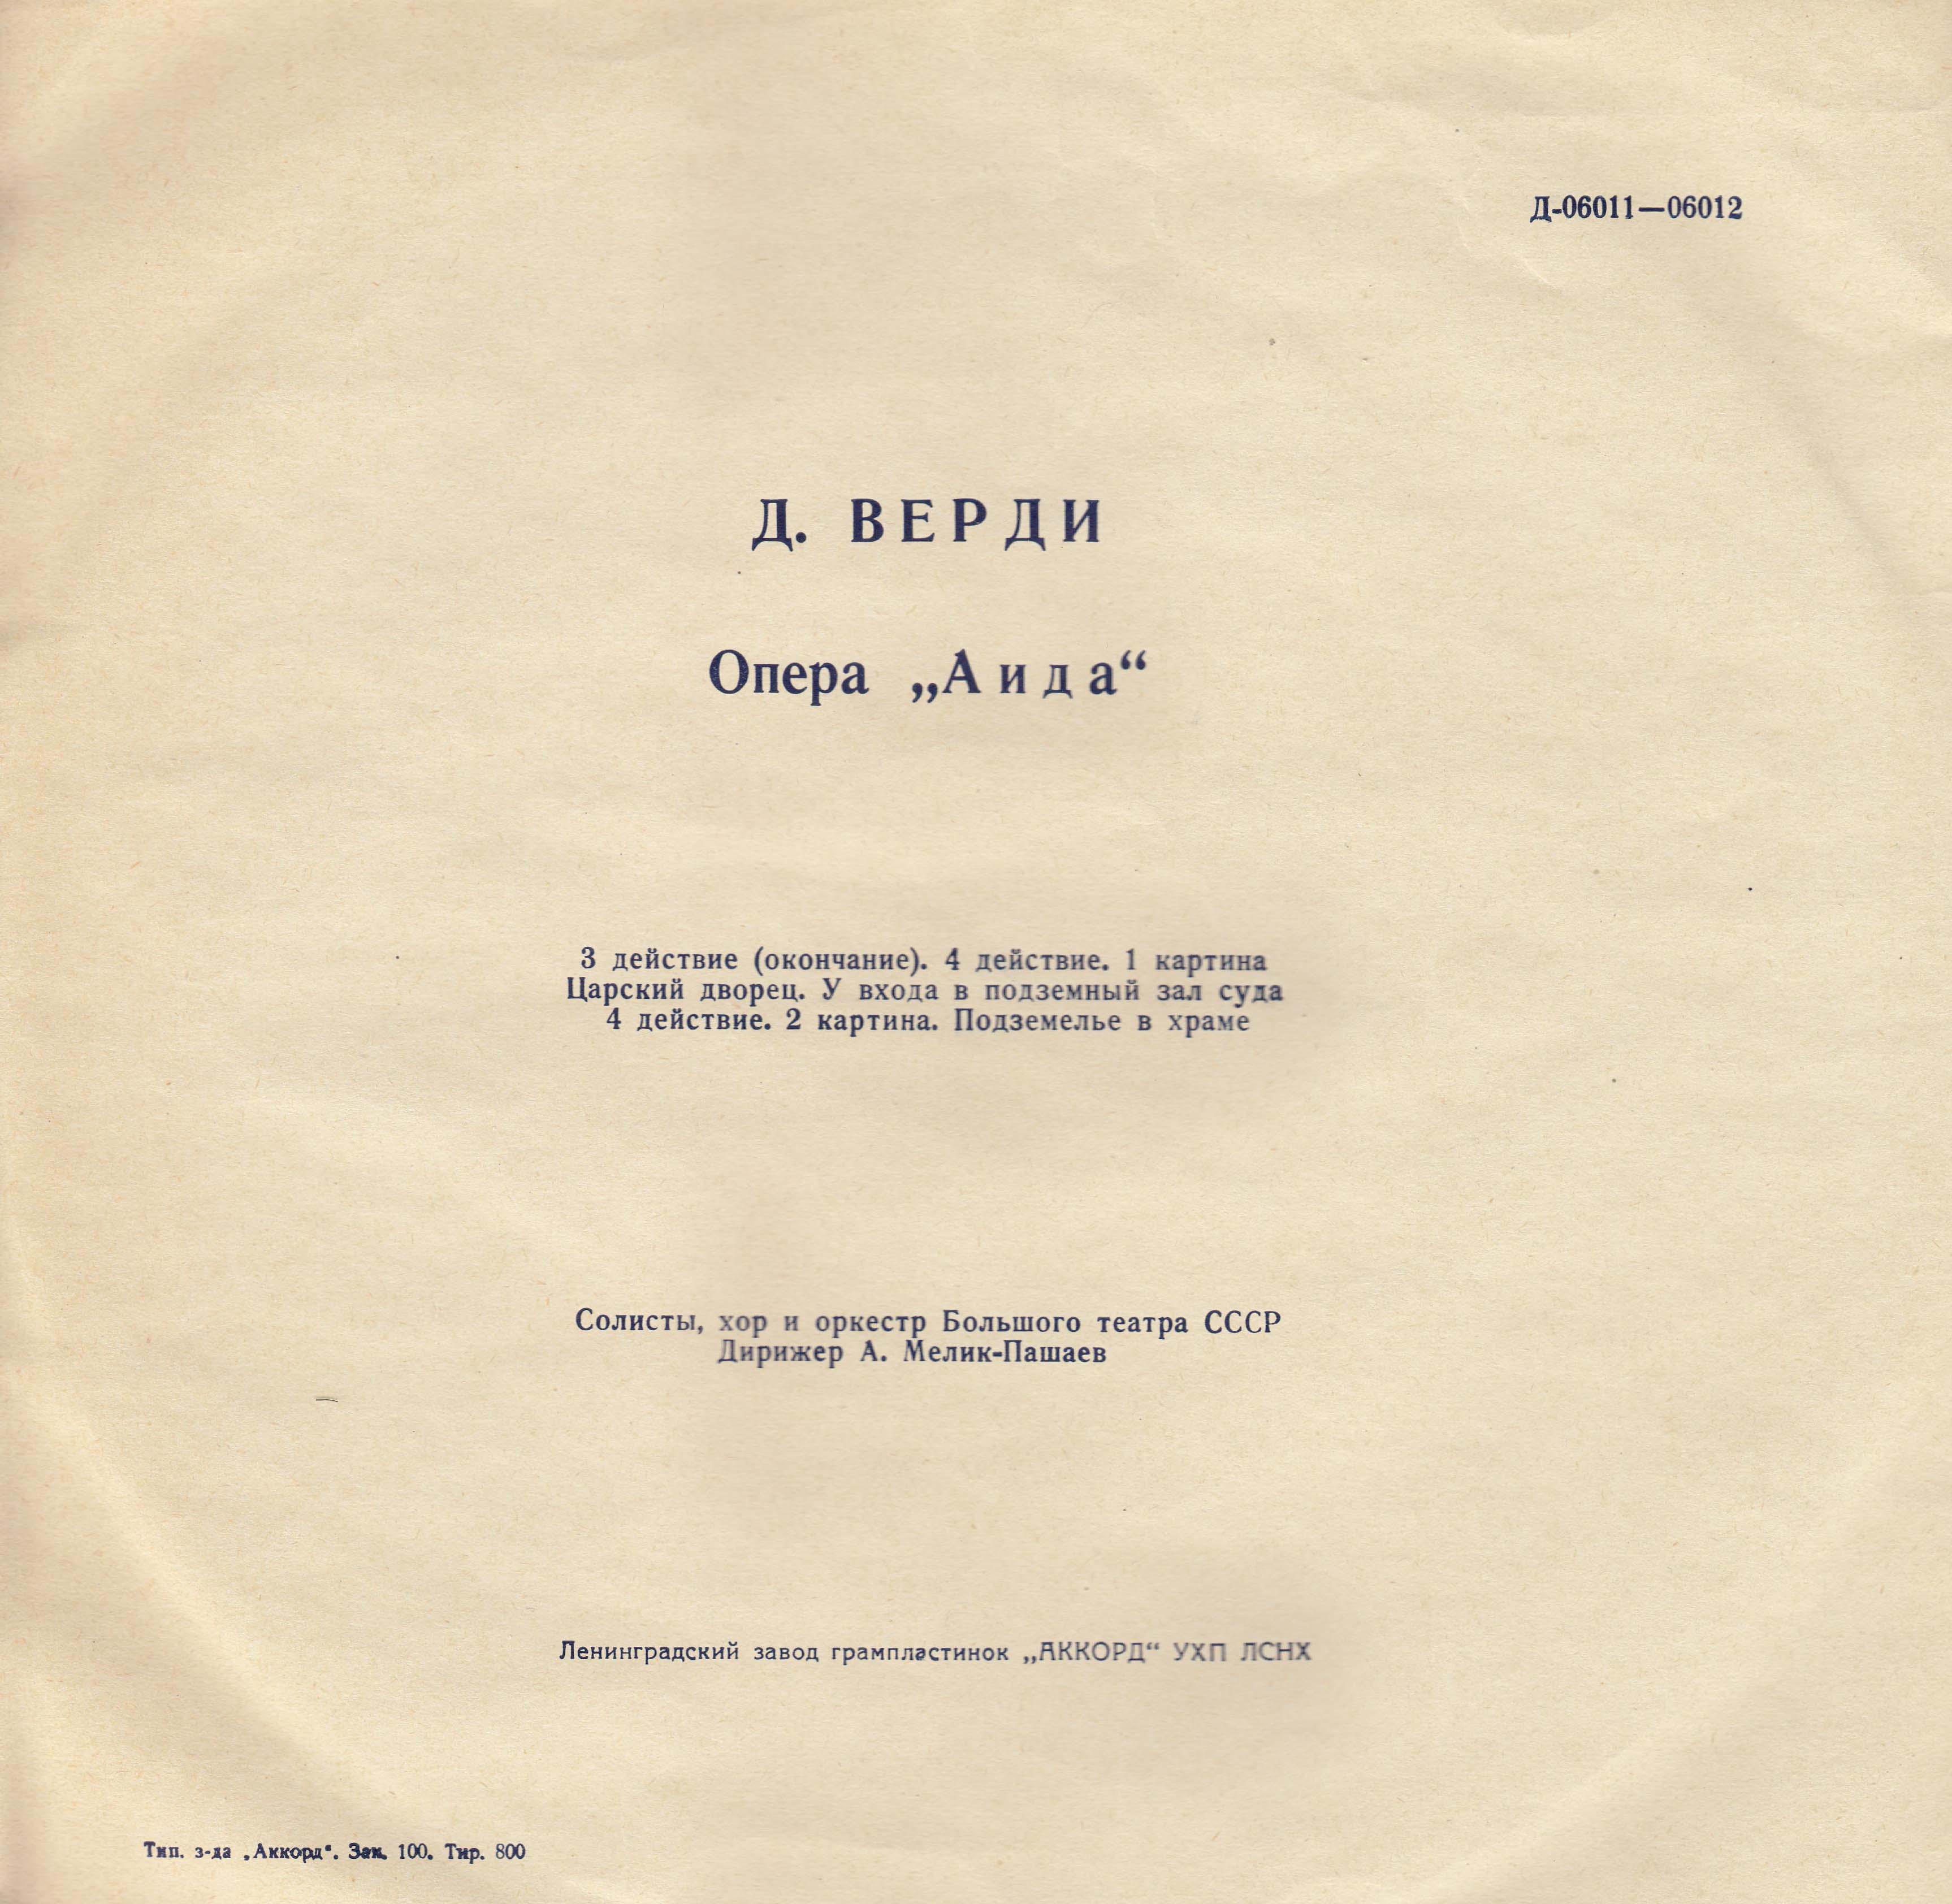 Дж. Верди: Опера "Аида"